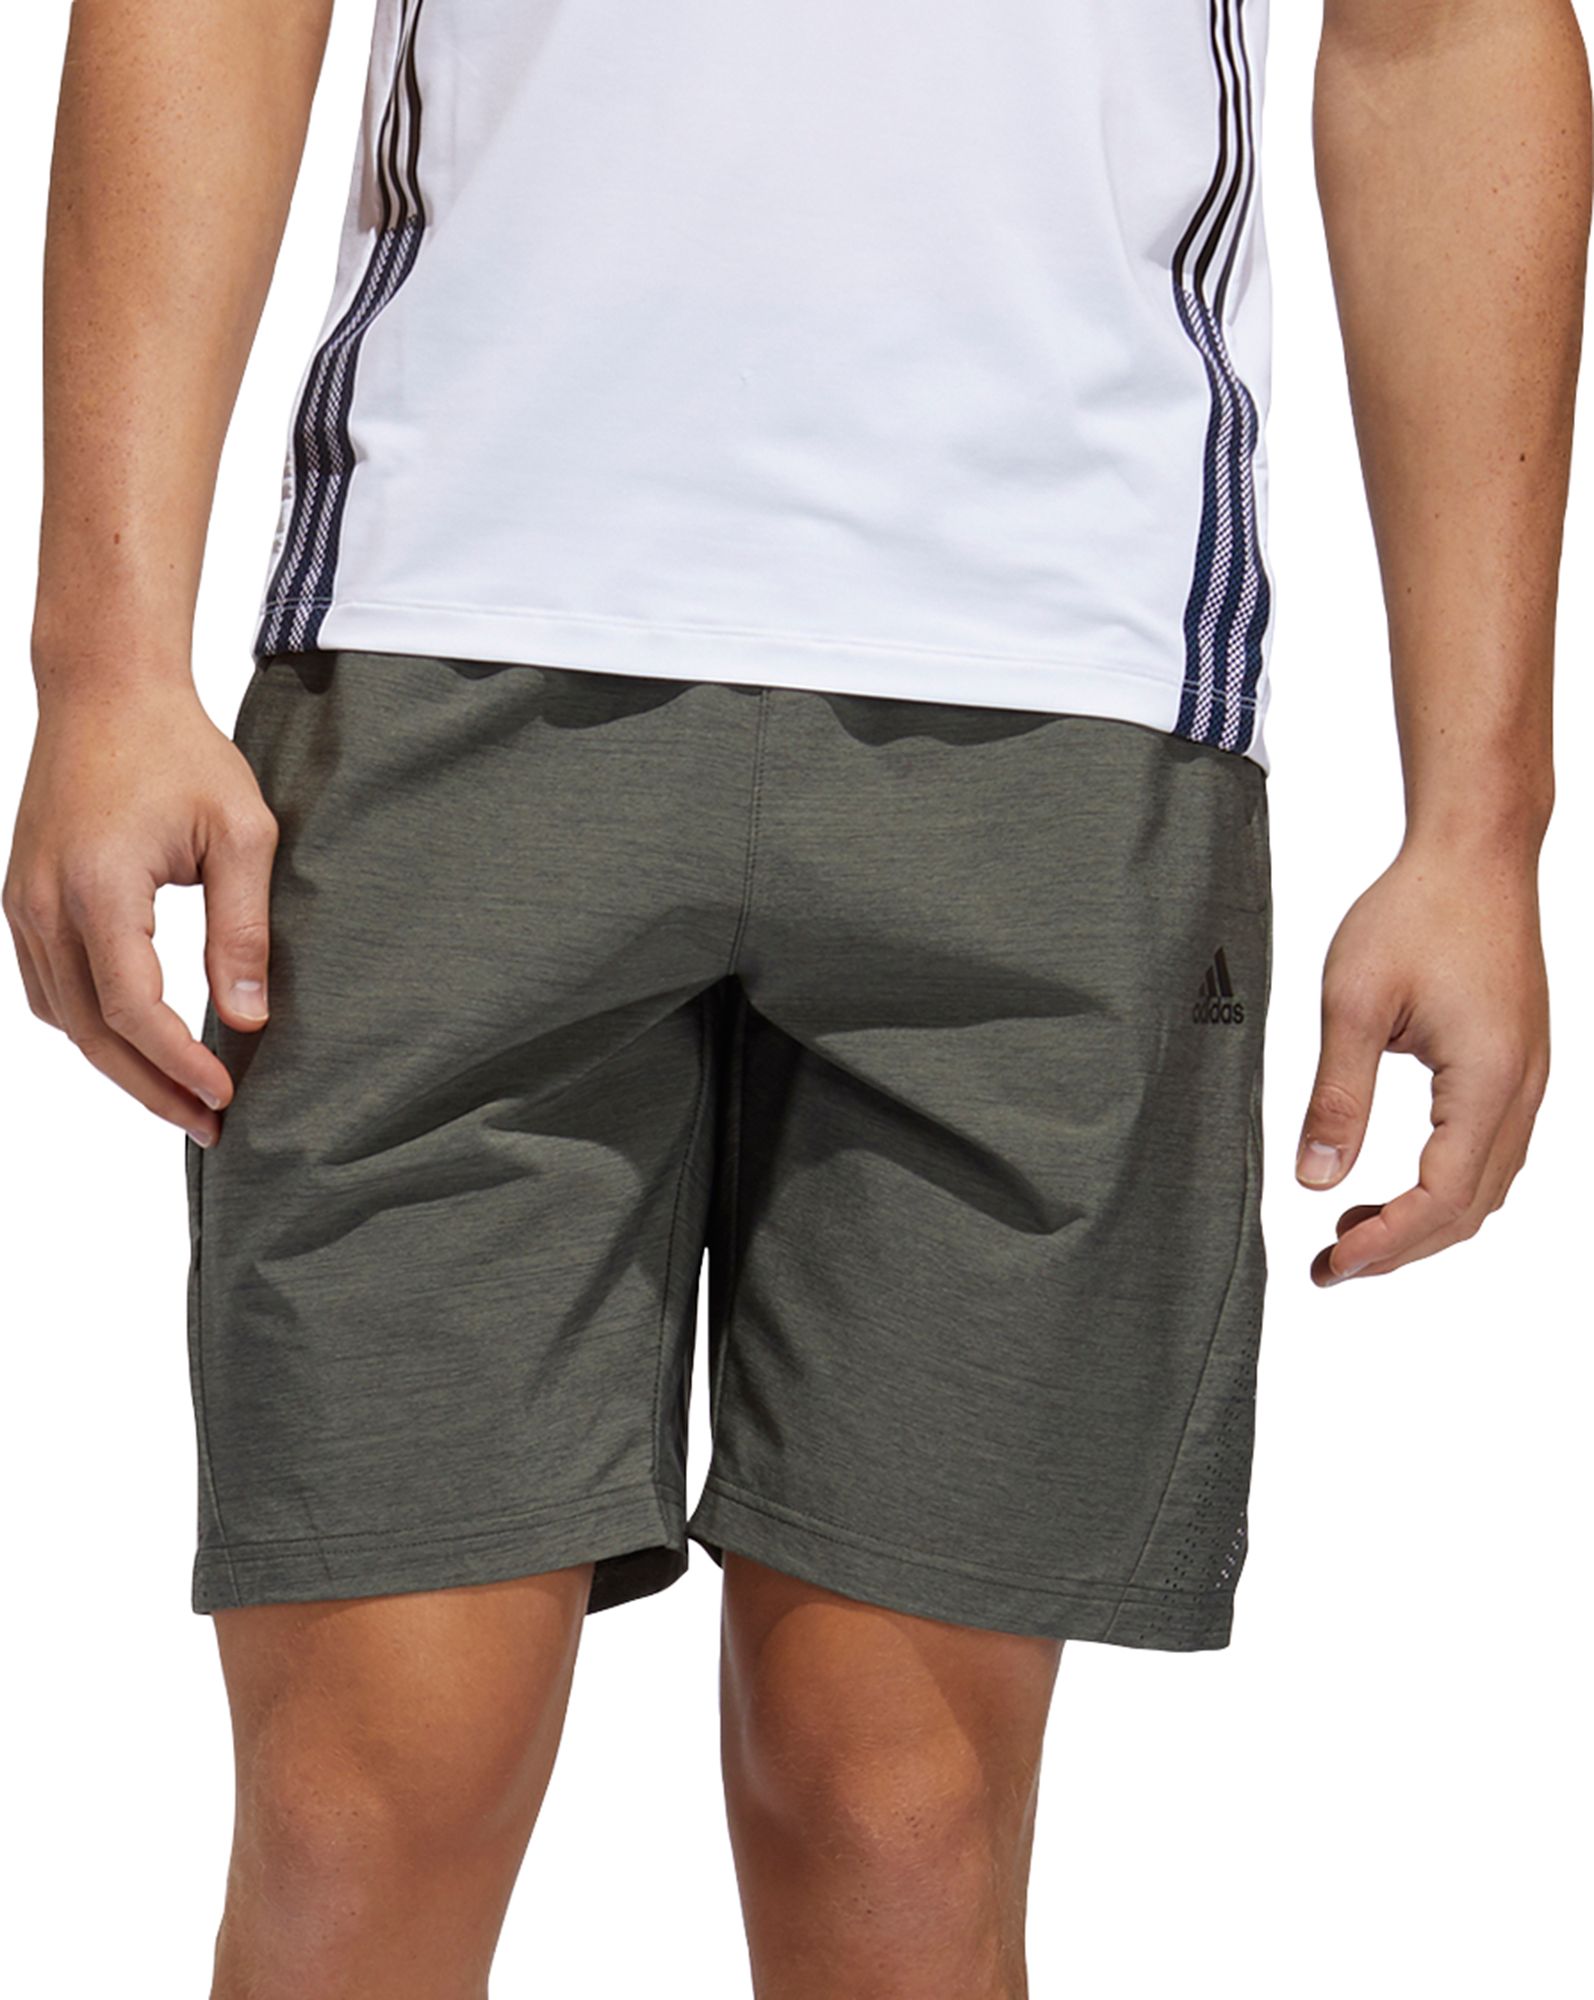 adidas axis woven 3s shorts